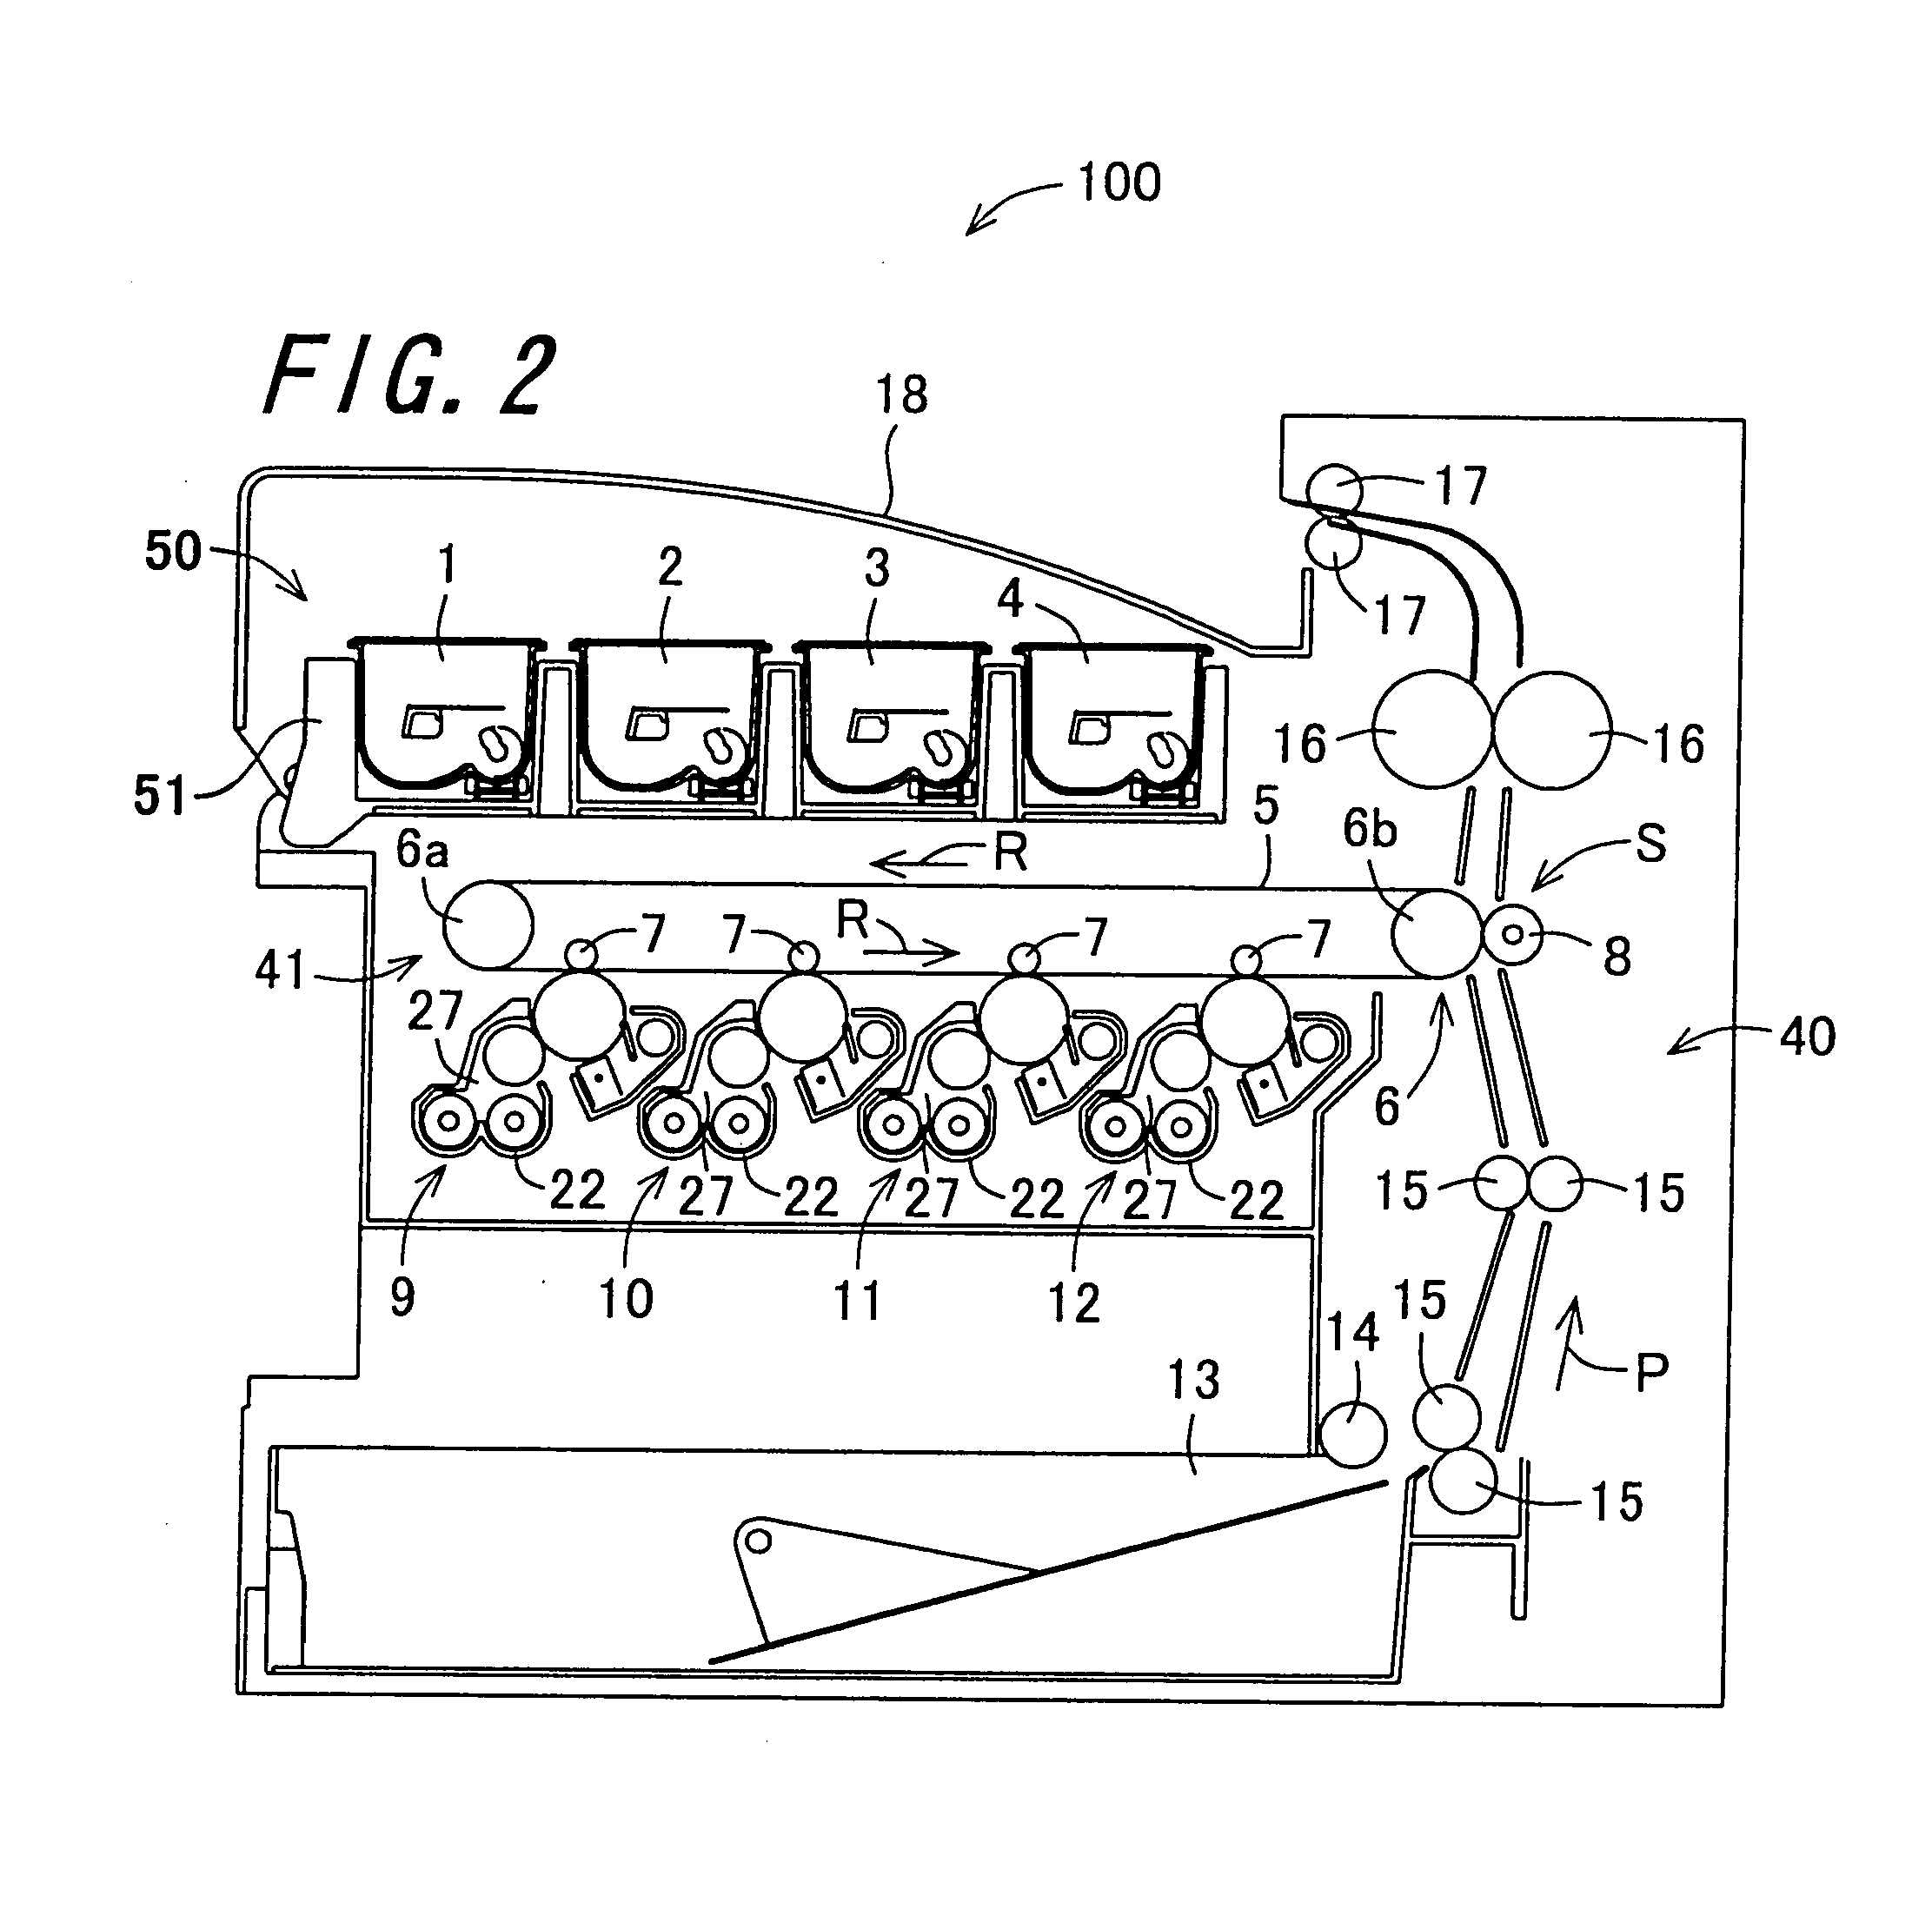 Toner replenishing apparatus, image forming apparatus, and color image forming apparatus